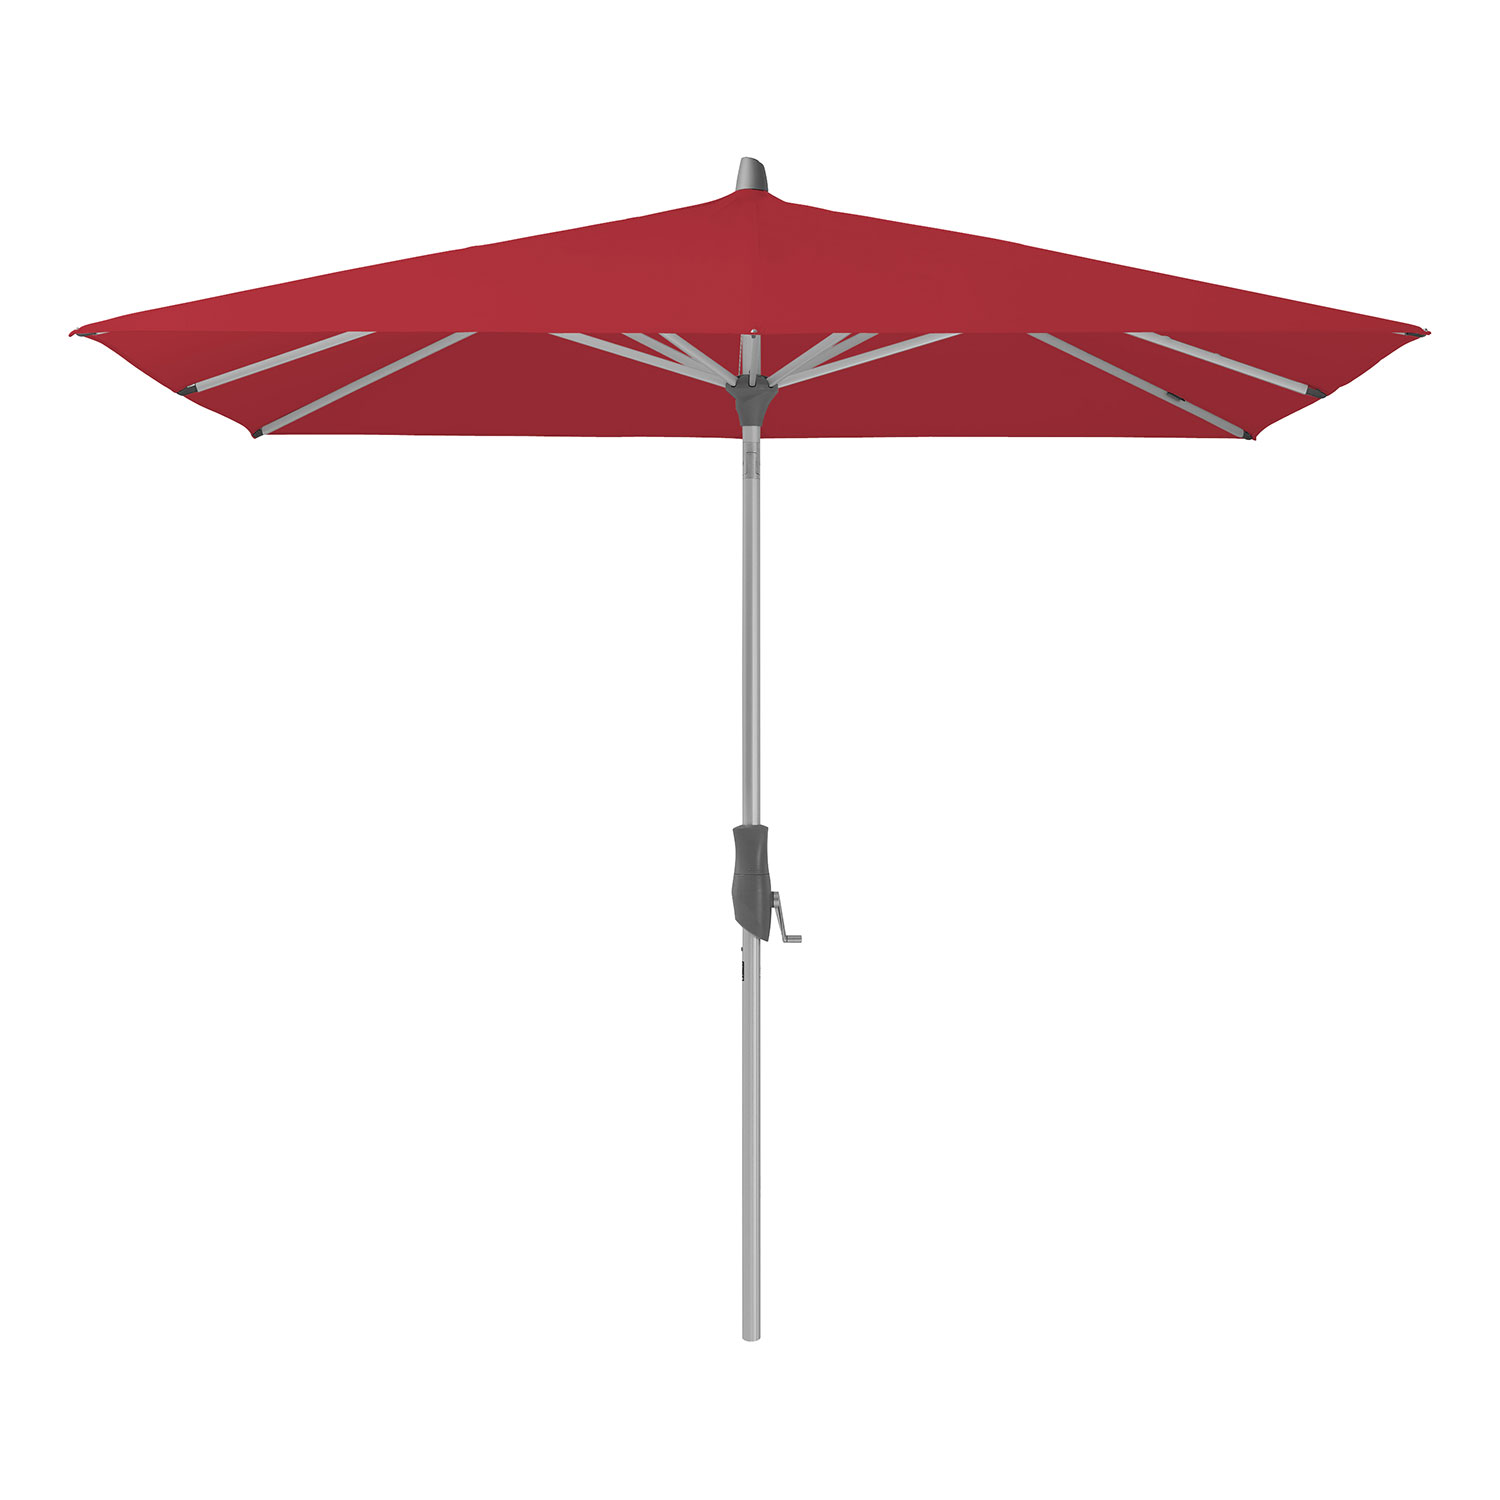 Glatz Alu-twist parasoll 240×240 cm cm kat.5 646 rubino